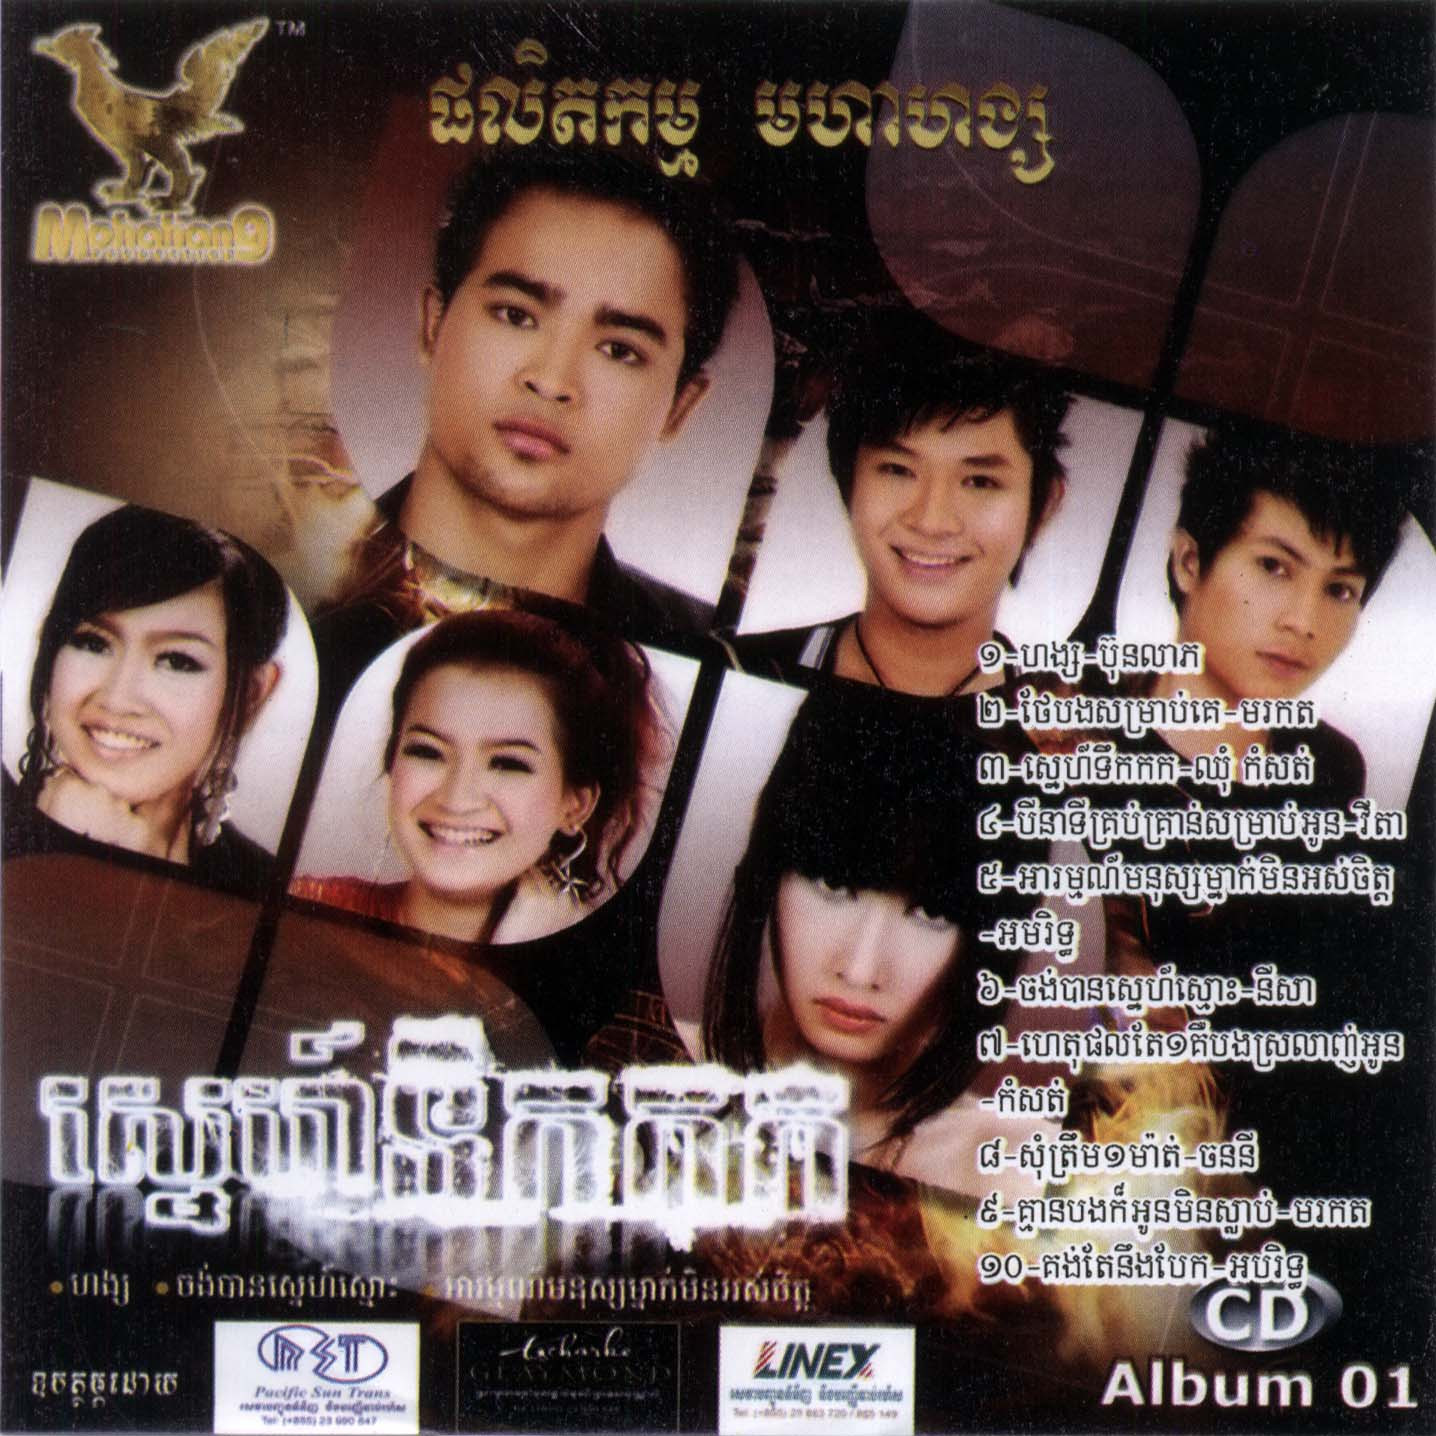 Mohahang CD VOL 01